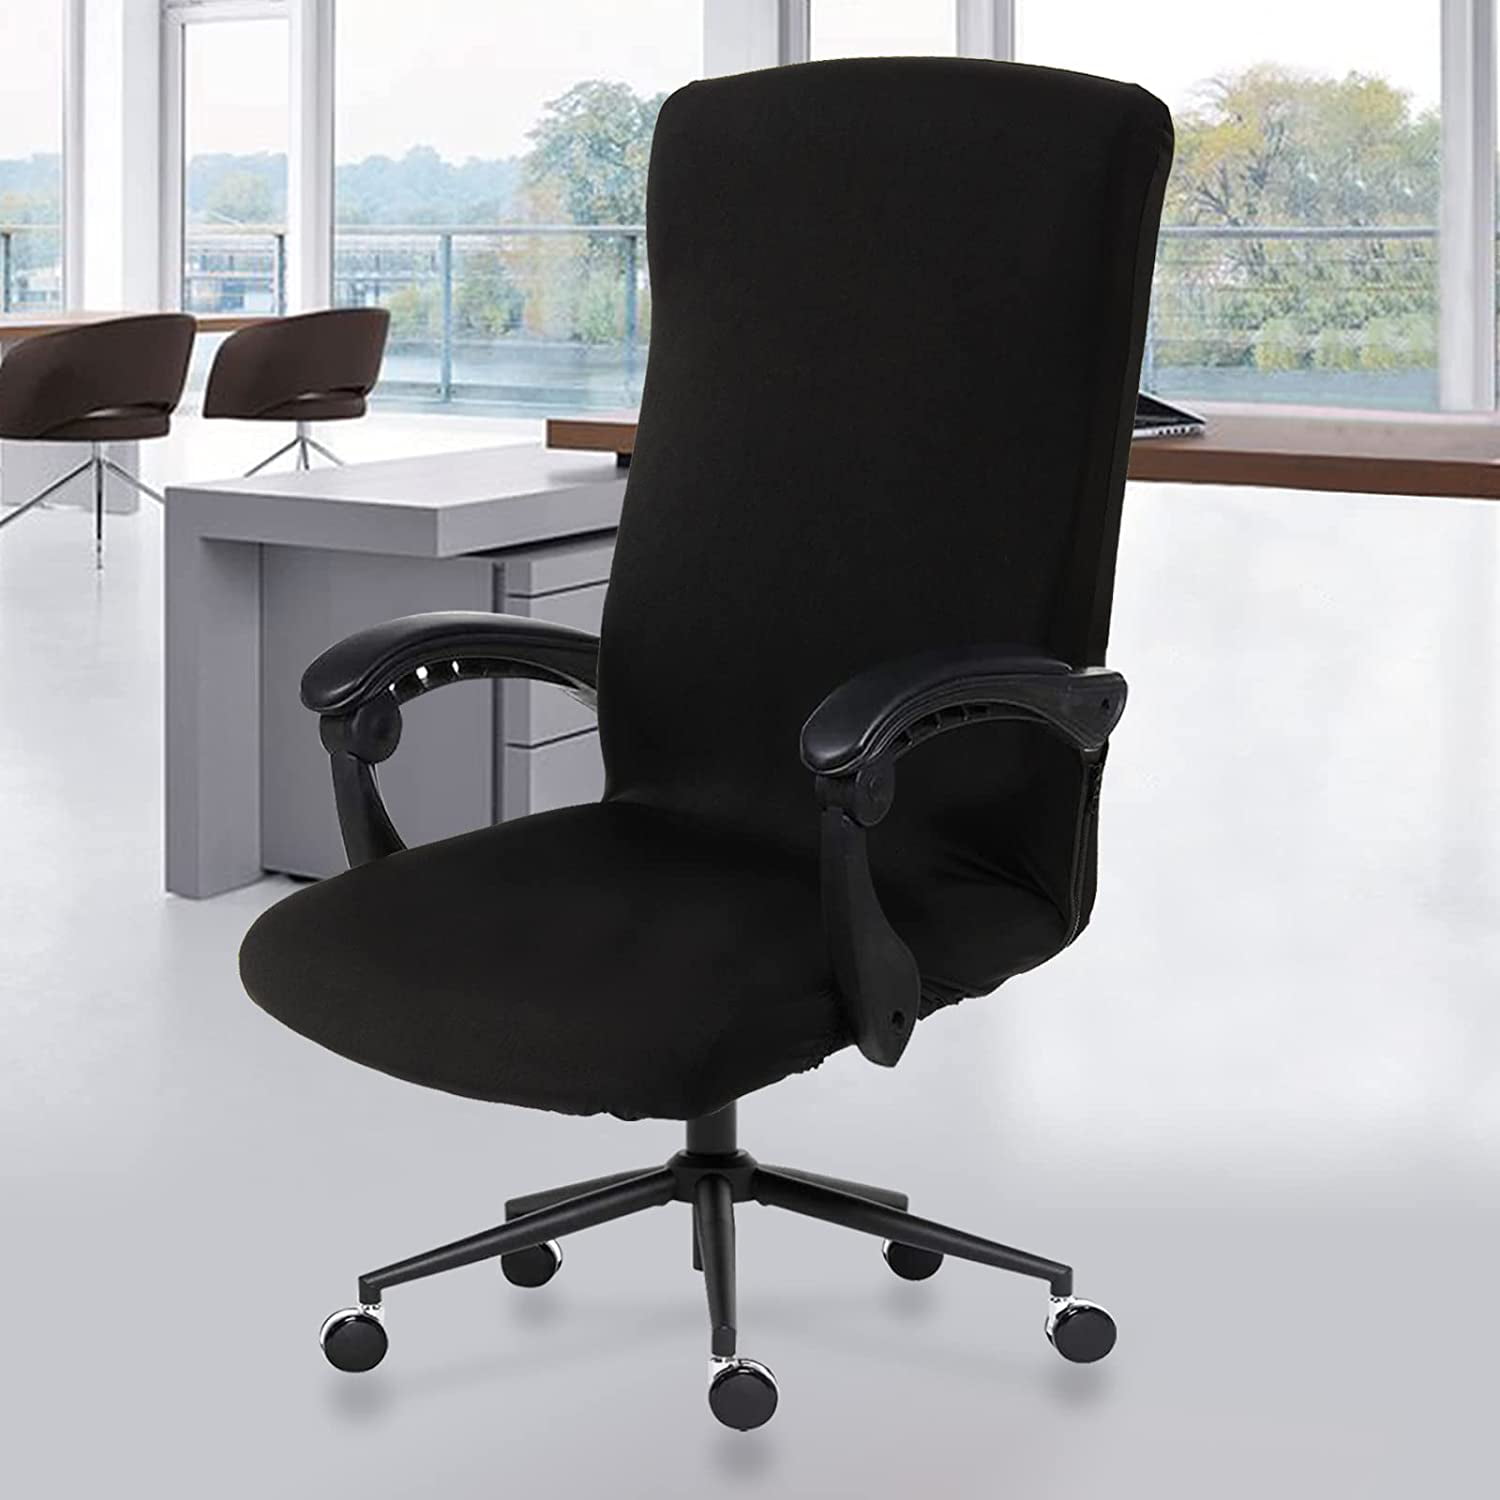 Stretch Bürostuhlbezug, Slipcover Protector Waschbar Abnehmbare Anti-Staub  Dreh Stuhl Sitzbezug für Computer Stuhl Sessel - Blau